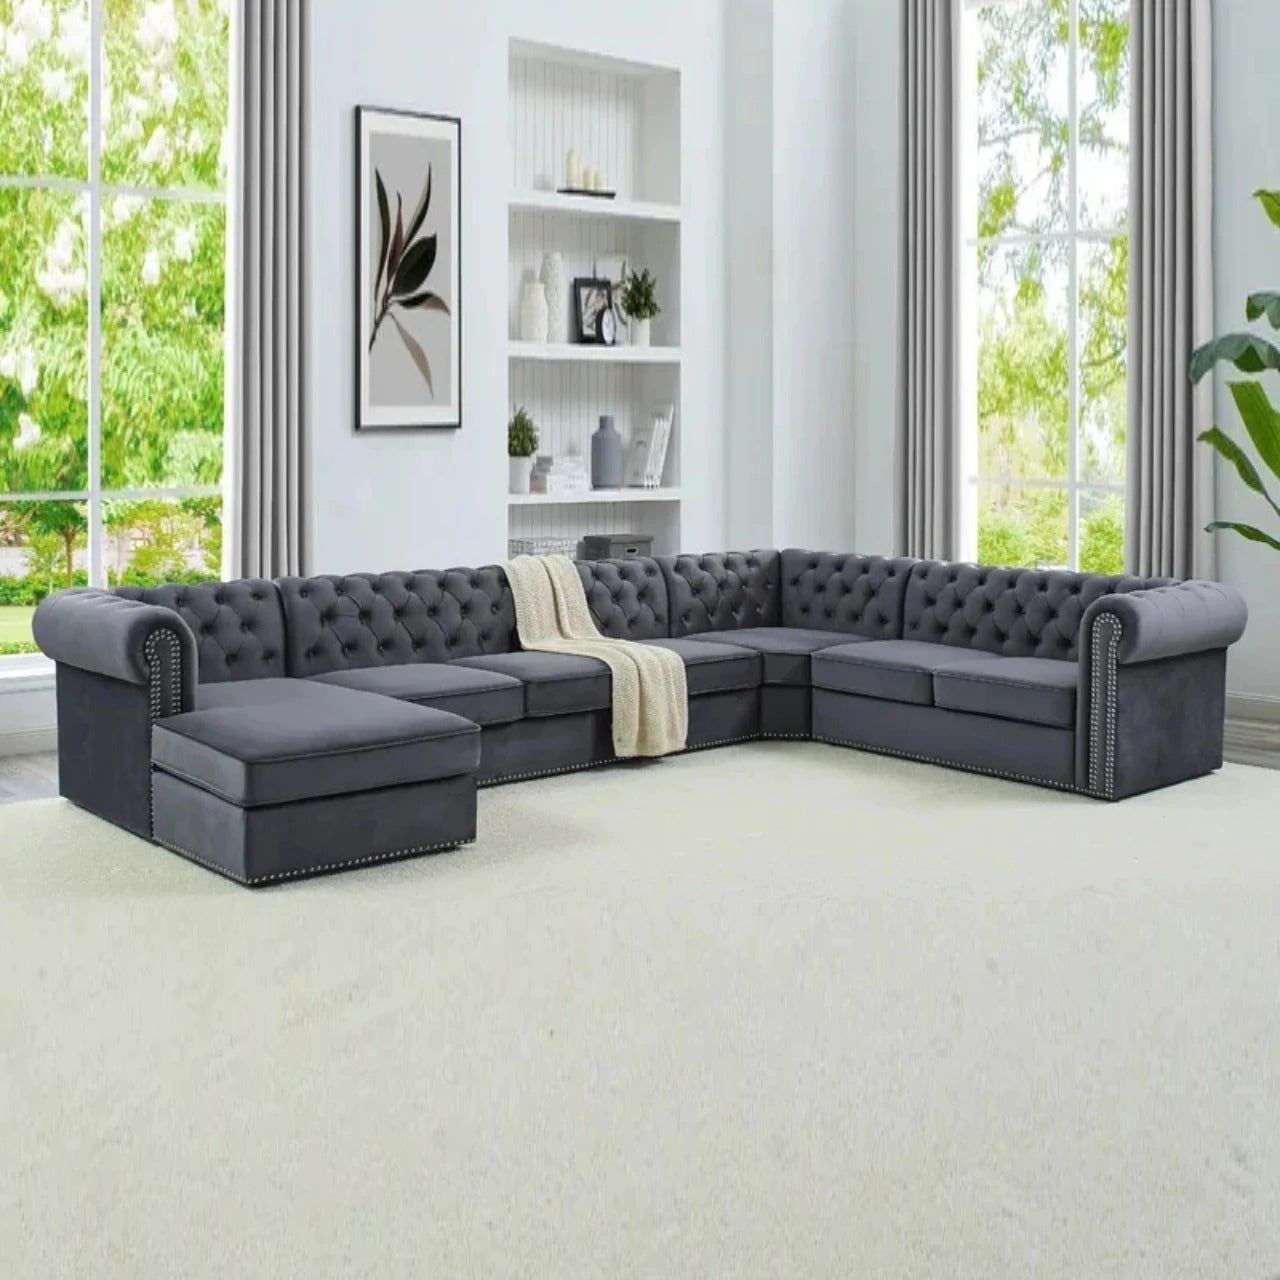 U Shape Sofa Design, Modern U Shaped Sofa Designs, Latest Designs Of U Shape Sofa Set, Trending U Shape Sofa Designs, U Shape Reversible Corner Sofa Set Designs